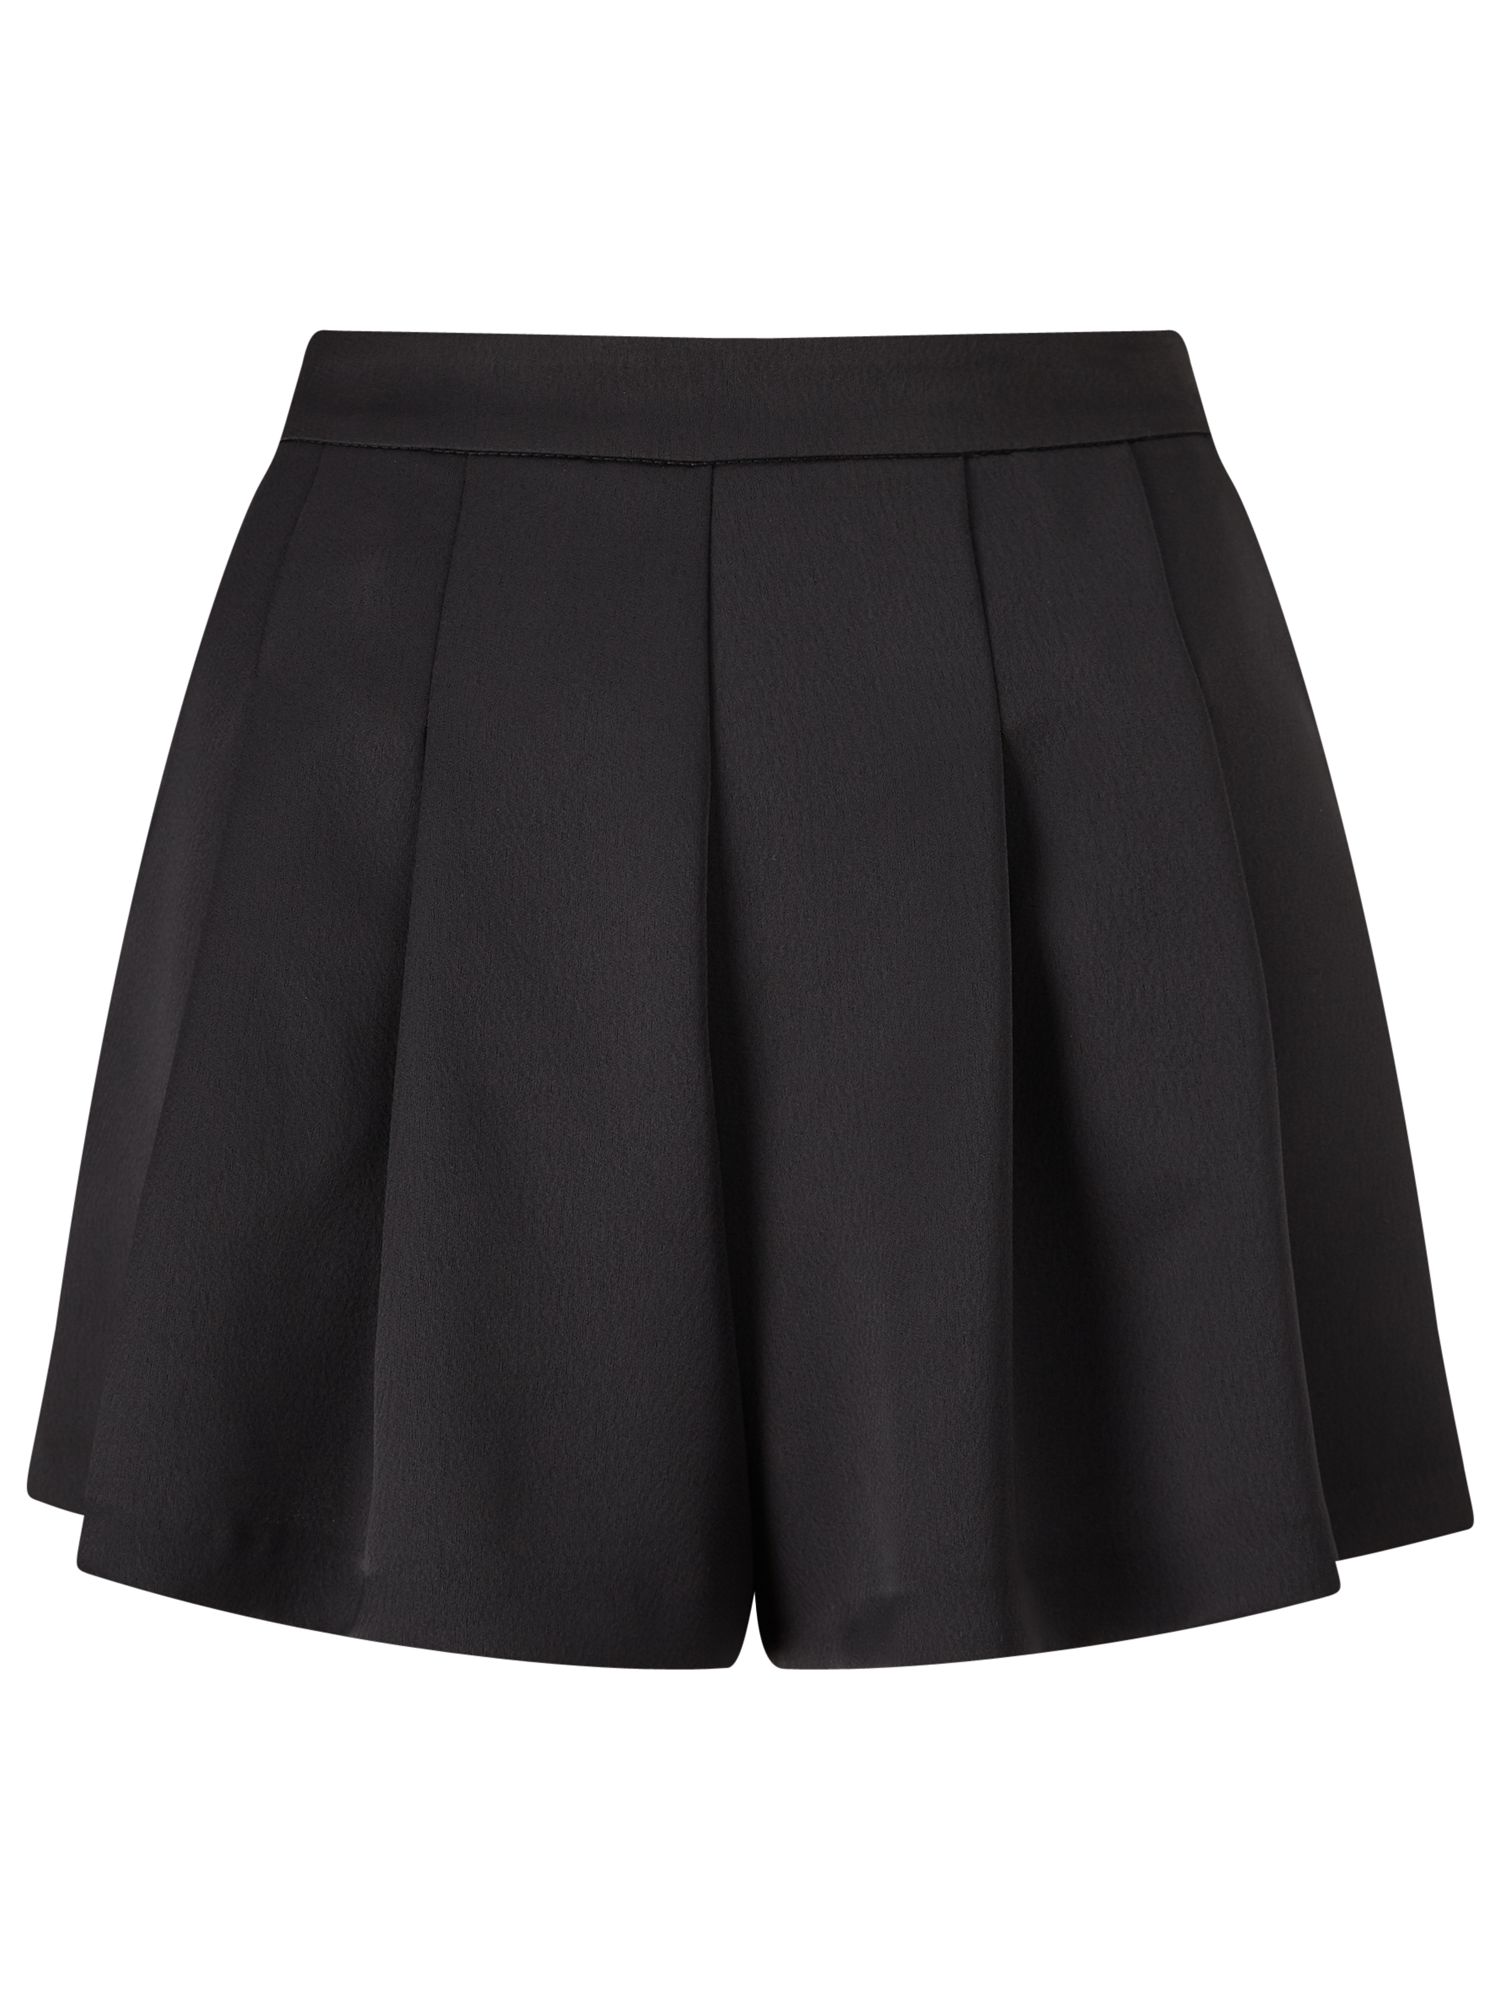 Miss Selfridge Satin Shorts, Black